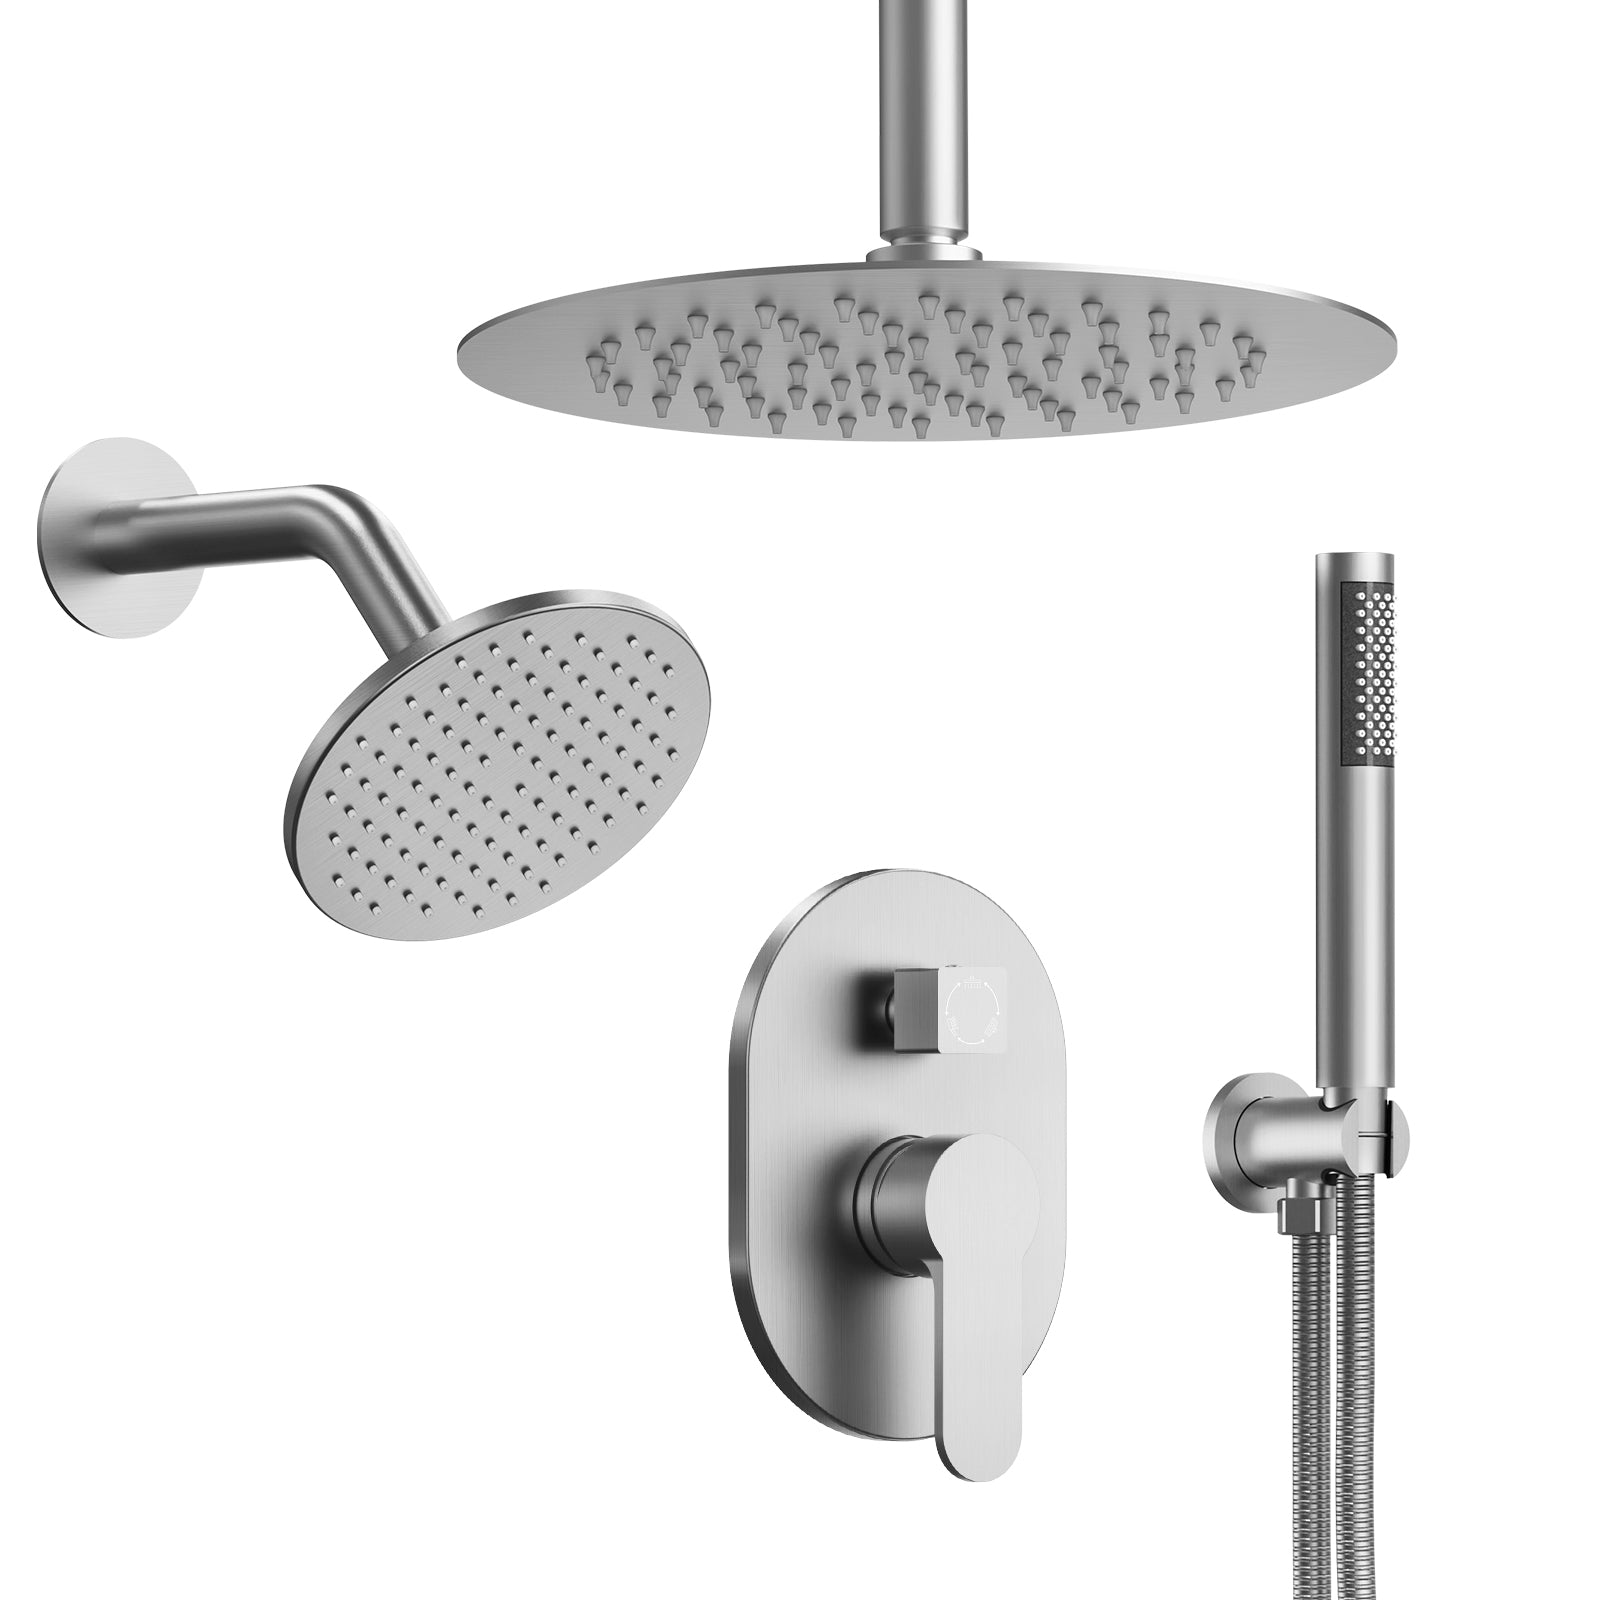 EVERSTEIN Rain Dual Shower Heads System: Brushed Nickel 10" Round High-Pressure Luxury Showerhead Fixtures Faucet Set